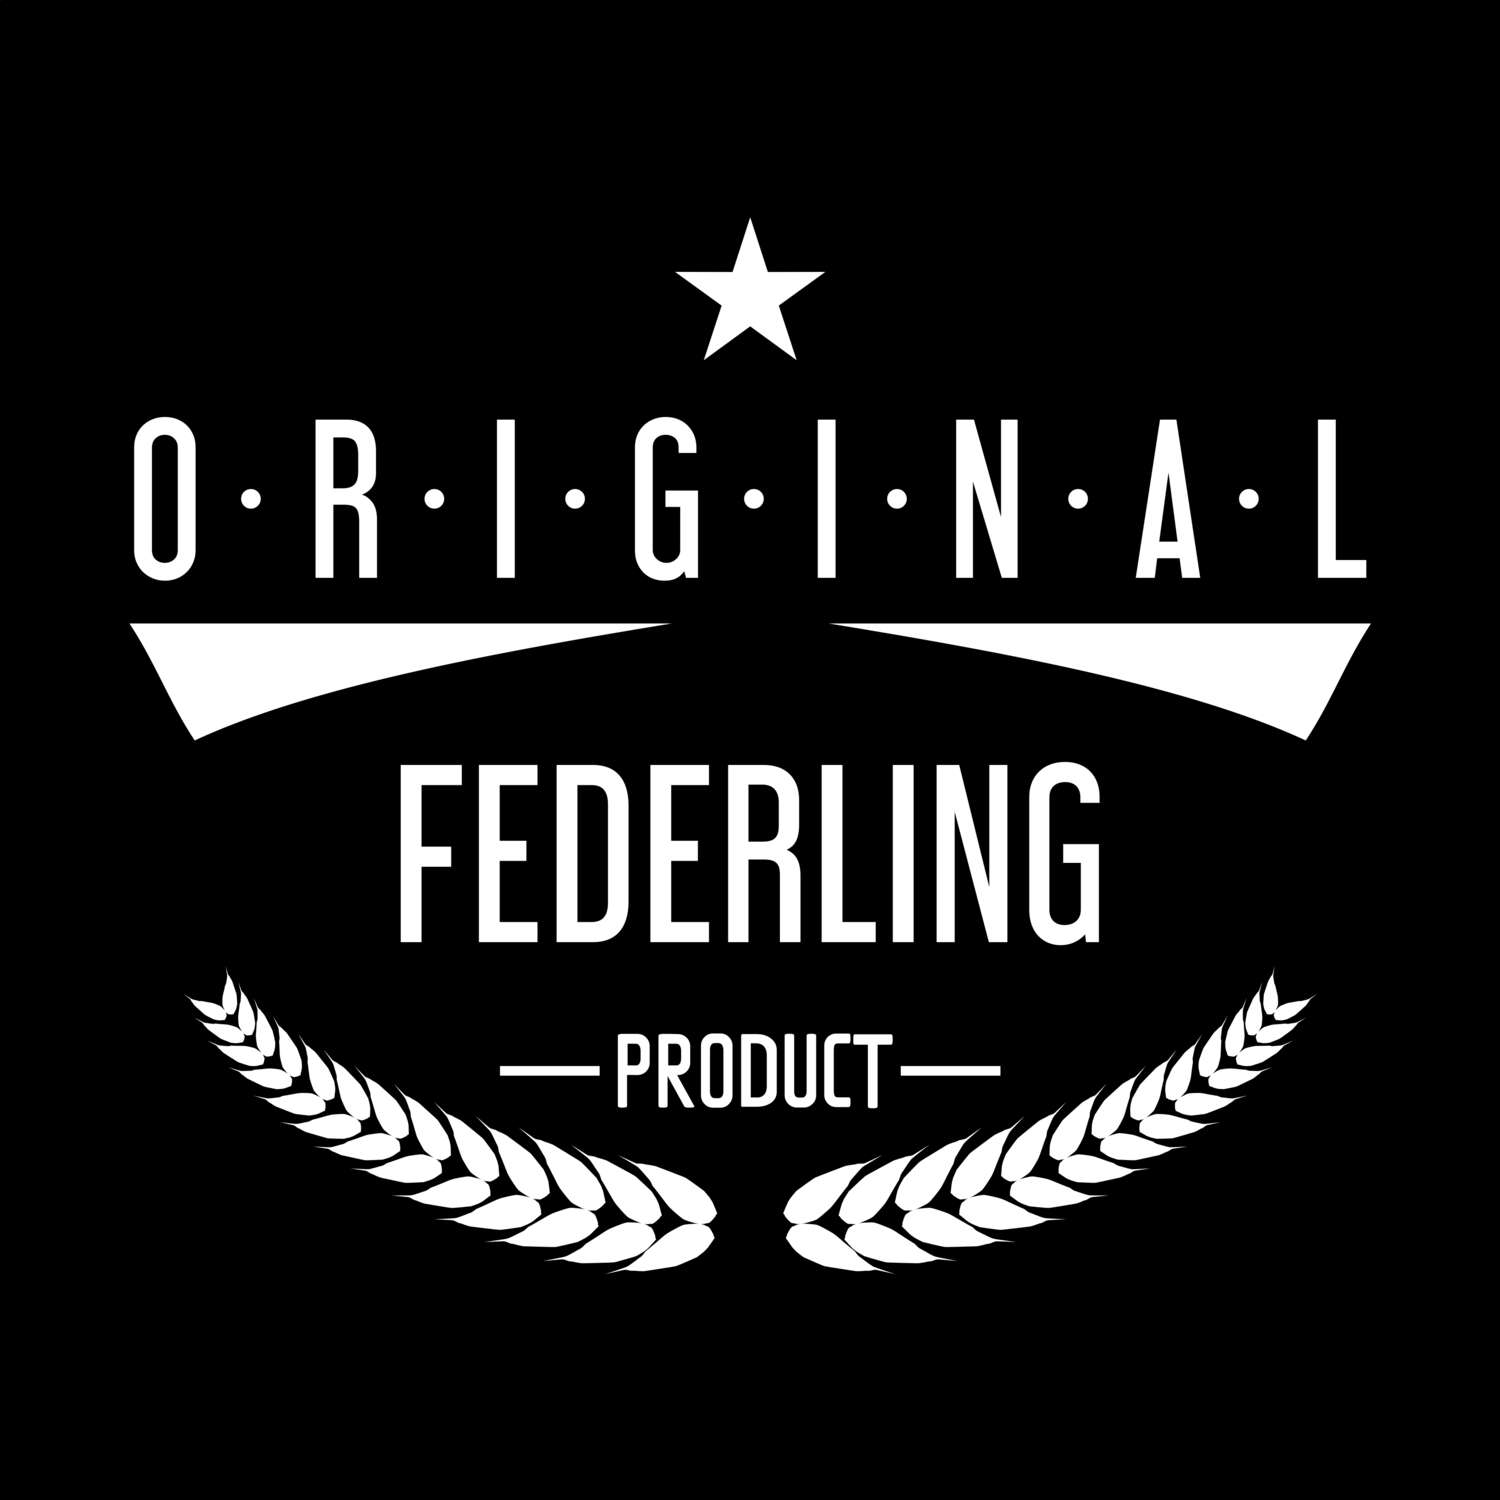 Federling T-Shirt »Original Product«